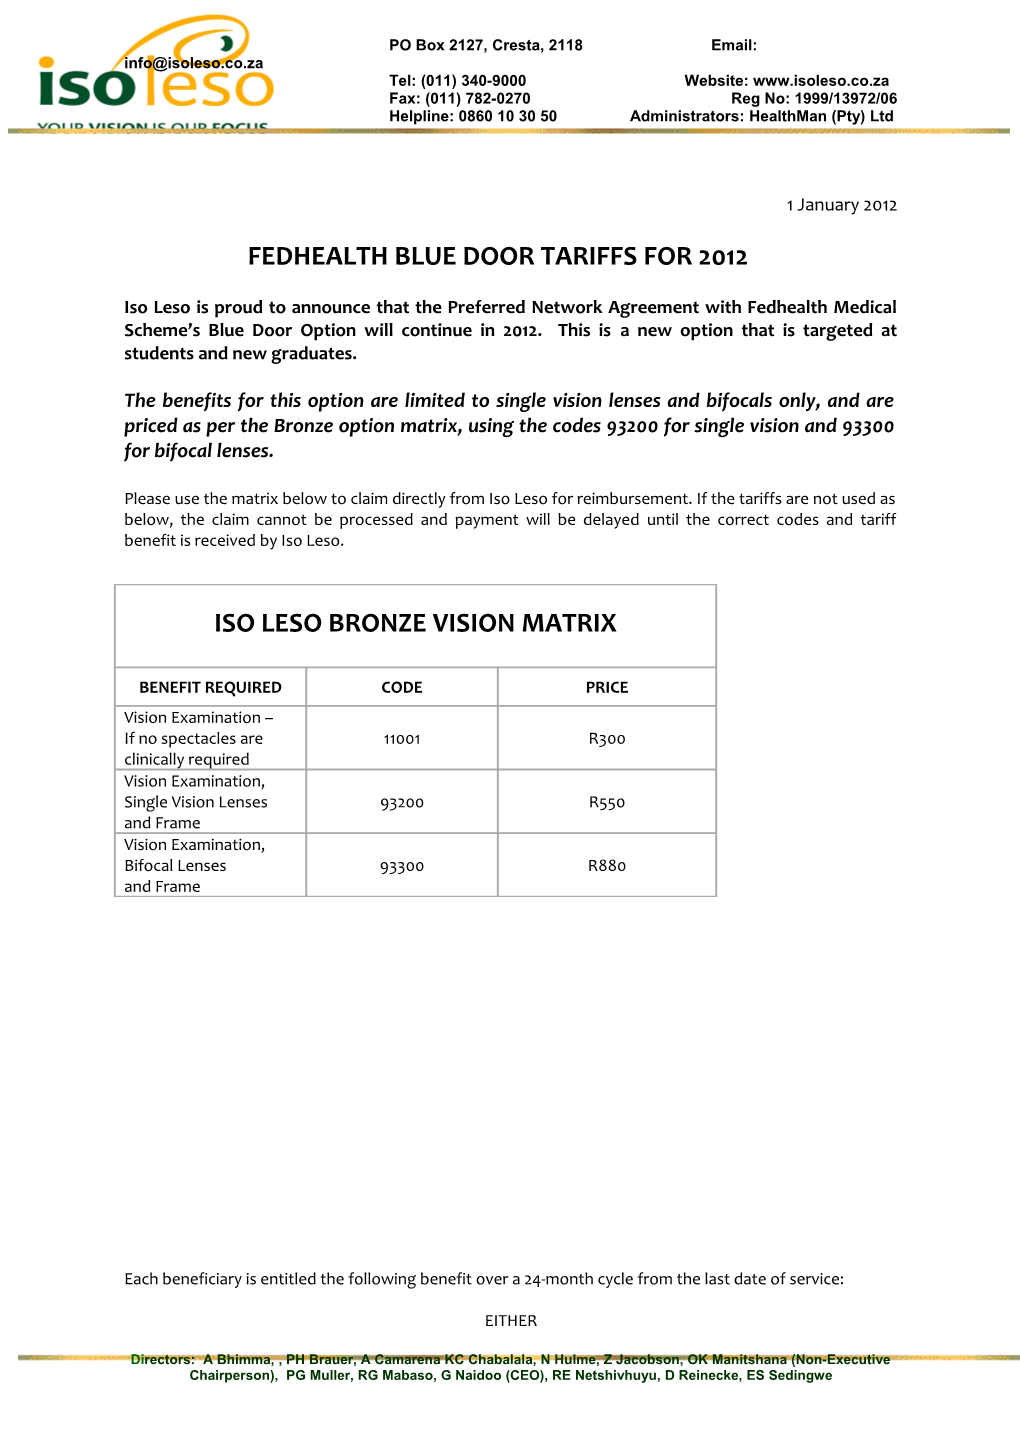 Fedhealth Blue Door Tariffs for 2012